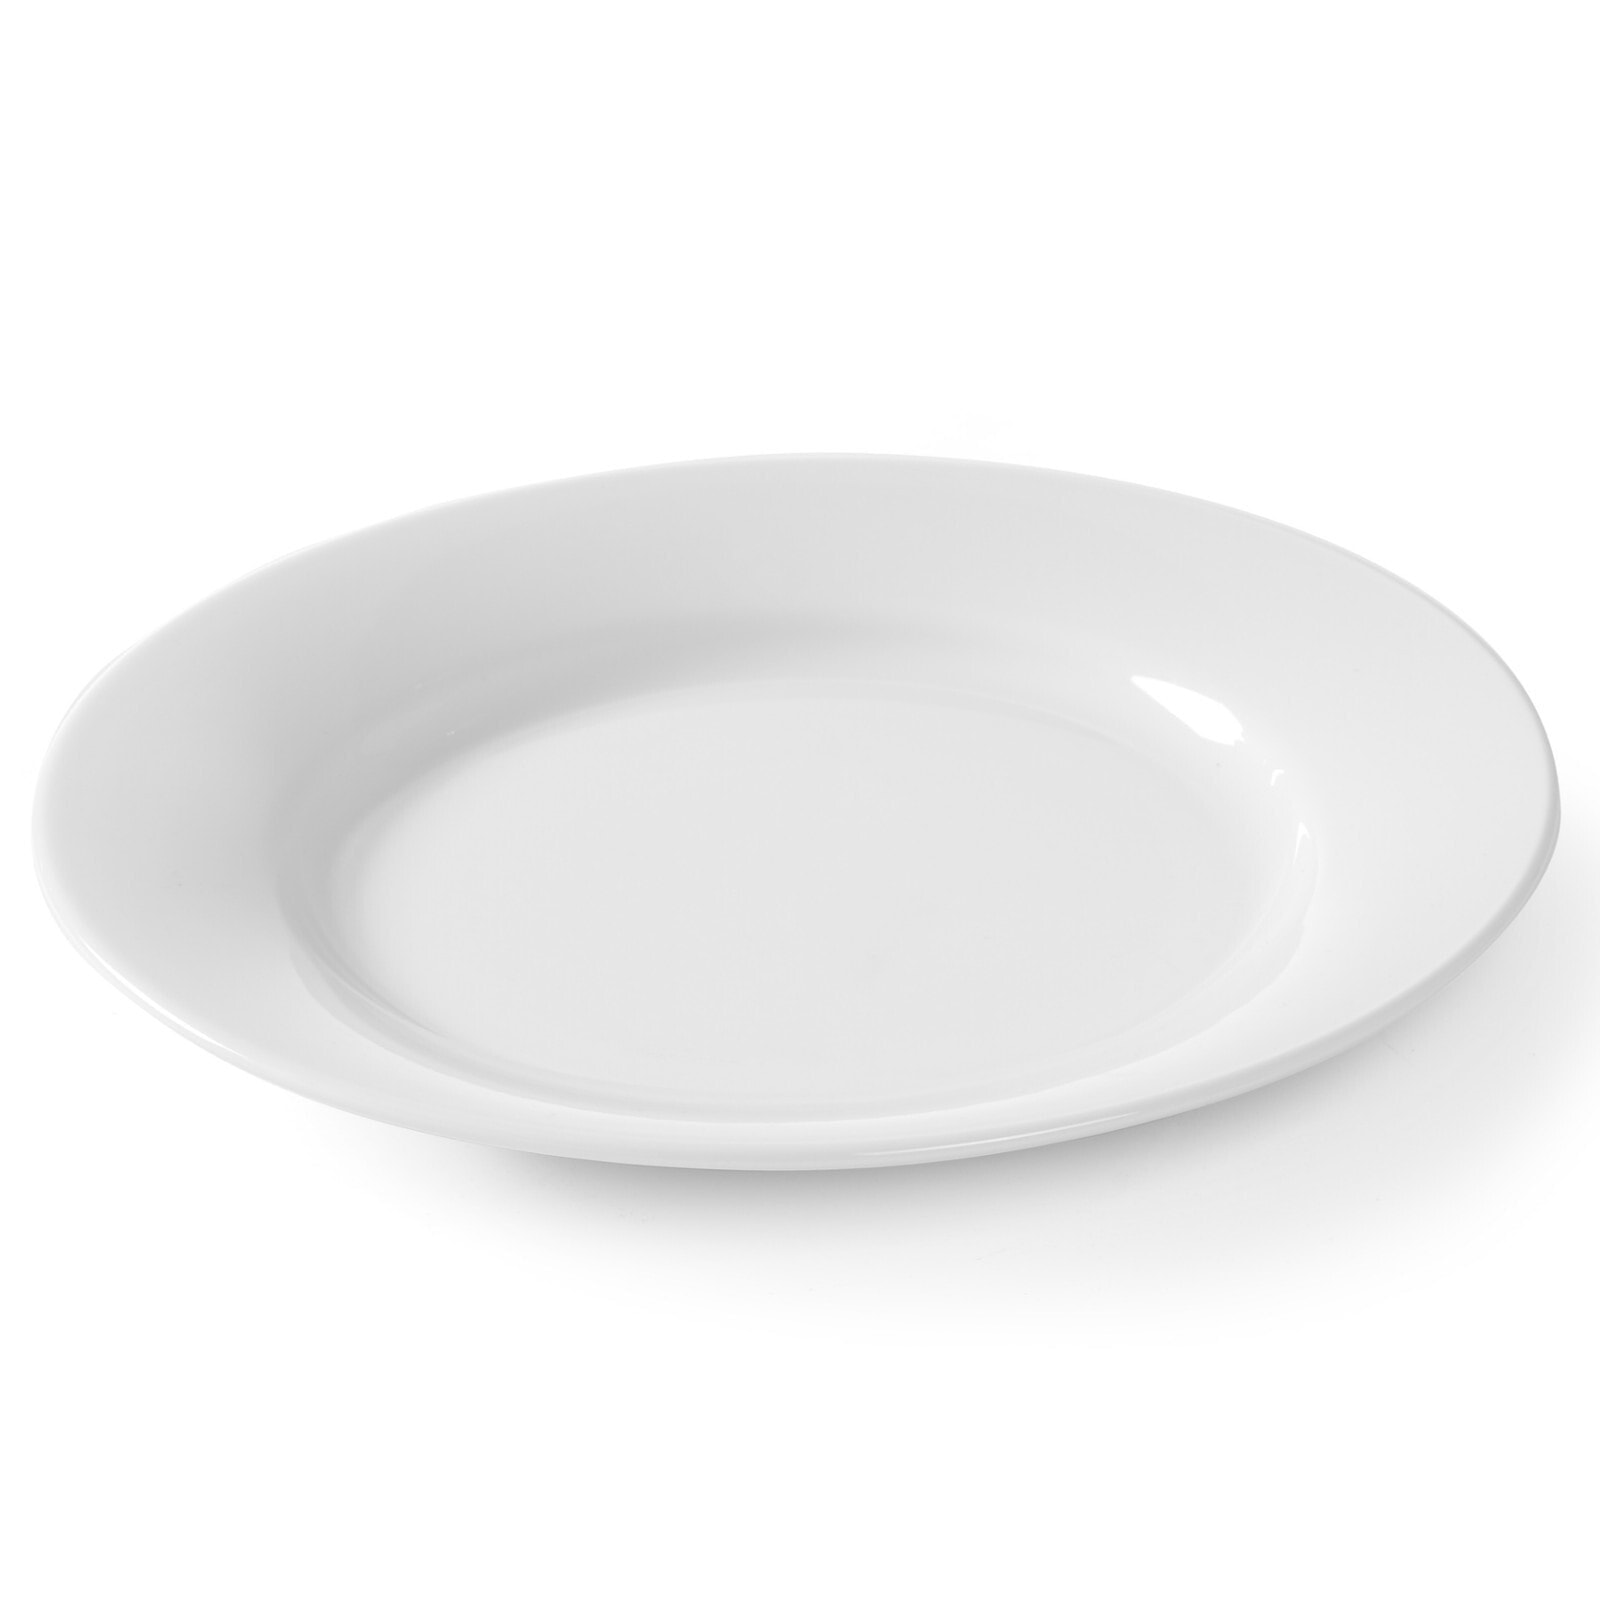 Plate OPTIMA white porcelain dia. 300mm set of 6 pcs. - Hendi 770894